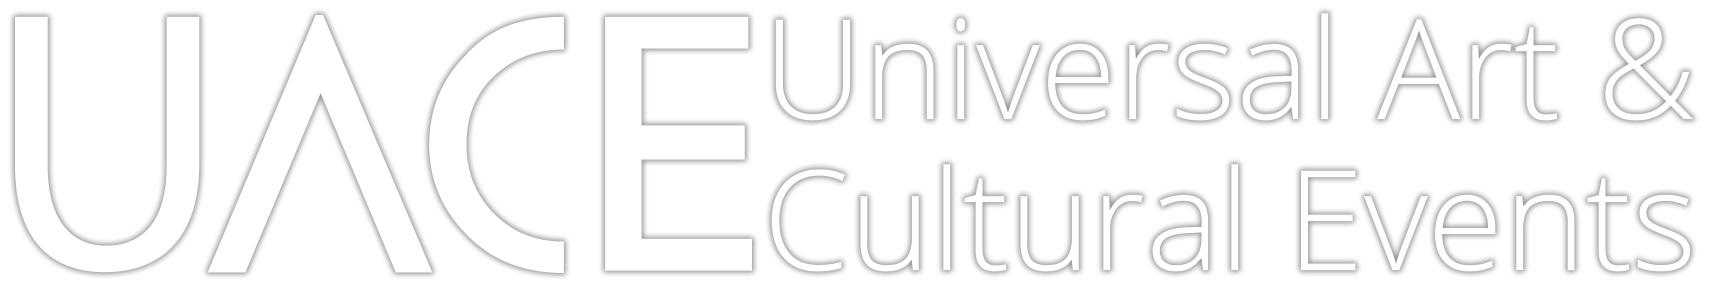 UACE Universal Art & Cultural Events